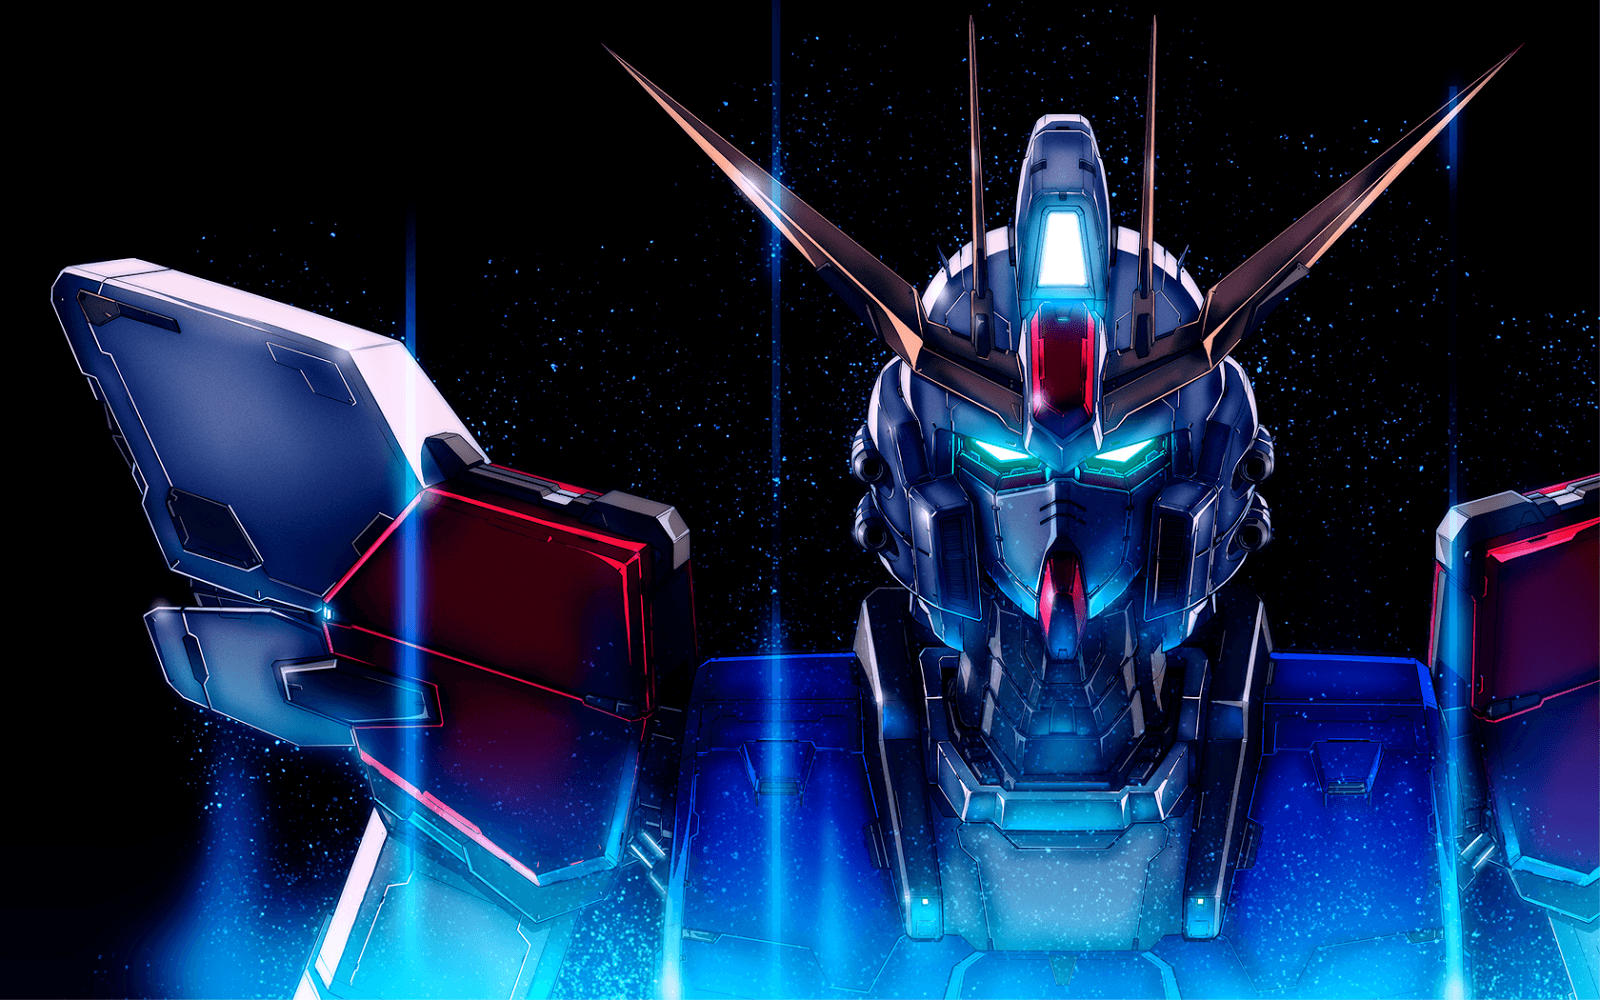 Gundam Digital works wallpaper and poster image Part 2